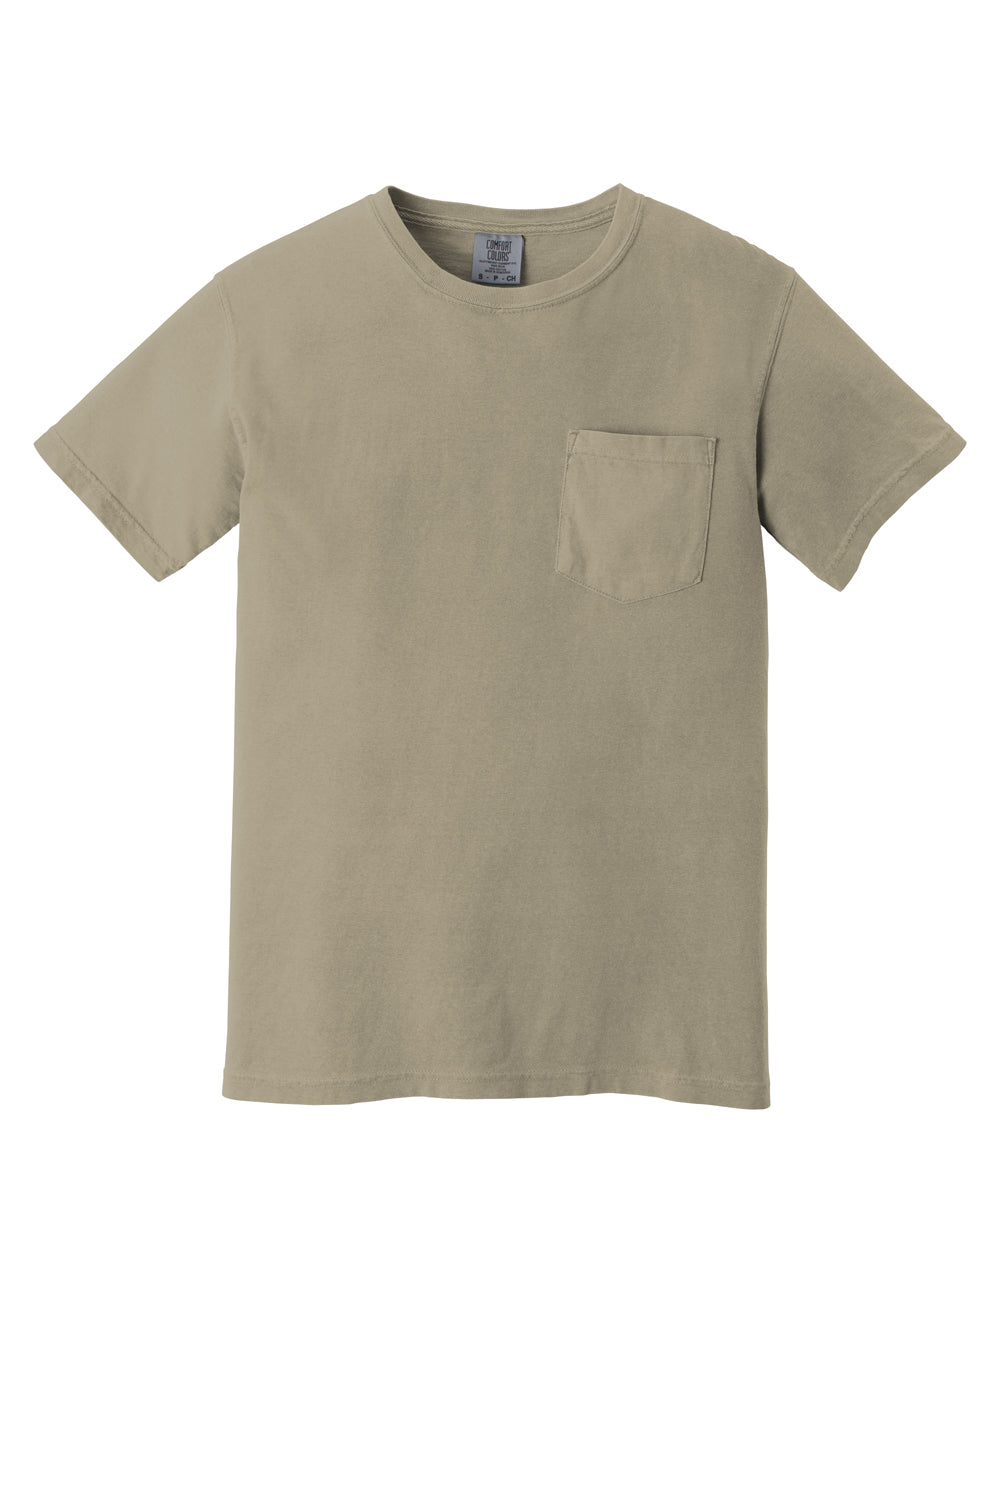 Comfort Colors Mens Short Sleeve Crewneck T-Shirt w/ Pocket Sandstone Flat Front